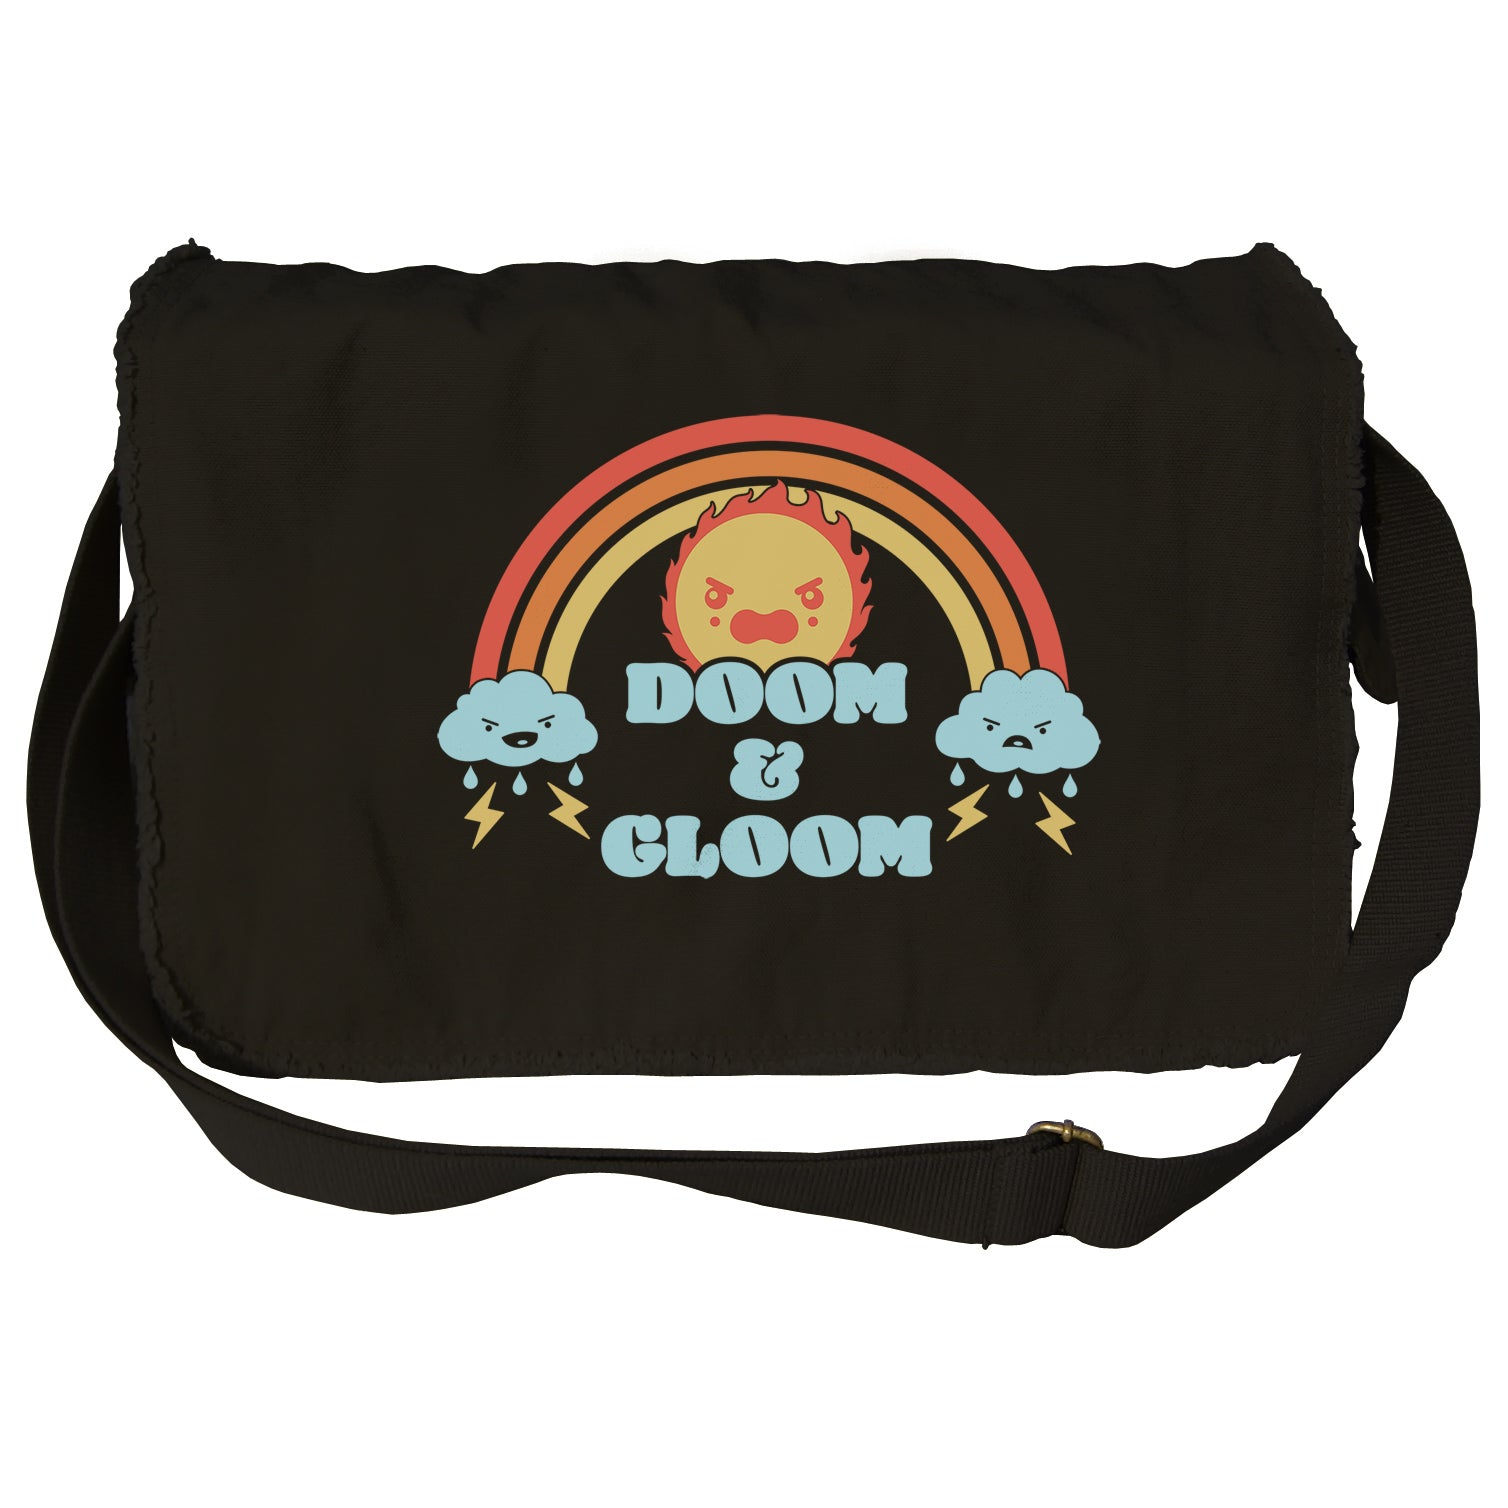 Doom and Gloom Messenger Bag